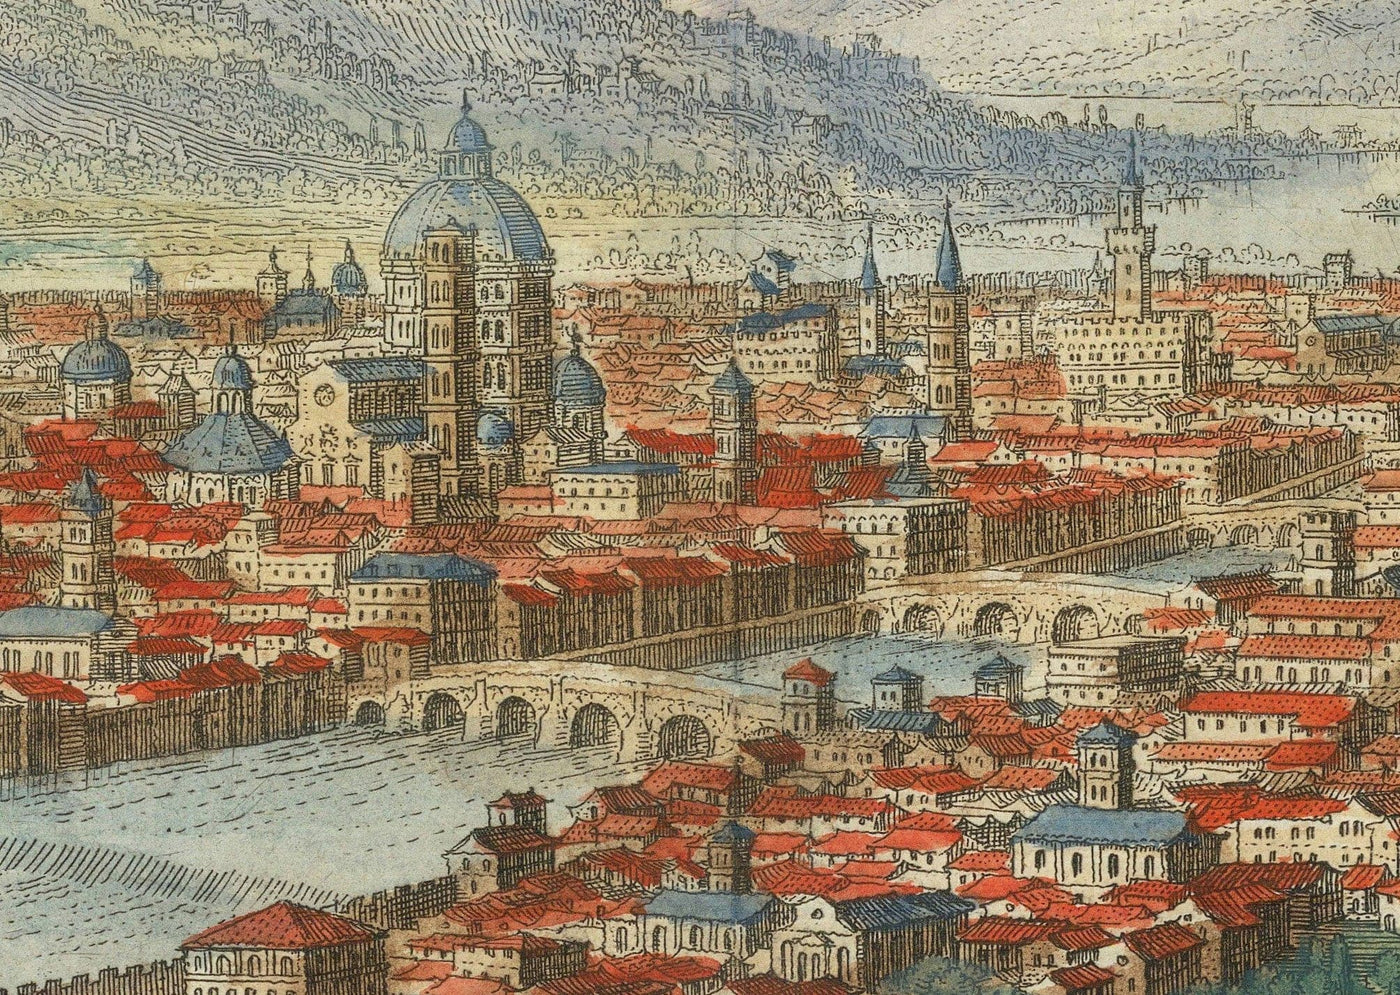 Old Birdseye Map of Florence, Italy, 1640 by Matthaus Merian - Firenze, Duomo, Arno River, Ponte Vecchio, Uffizi